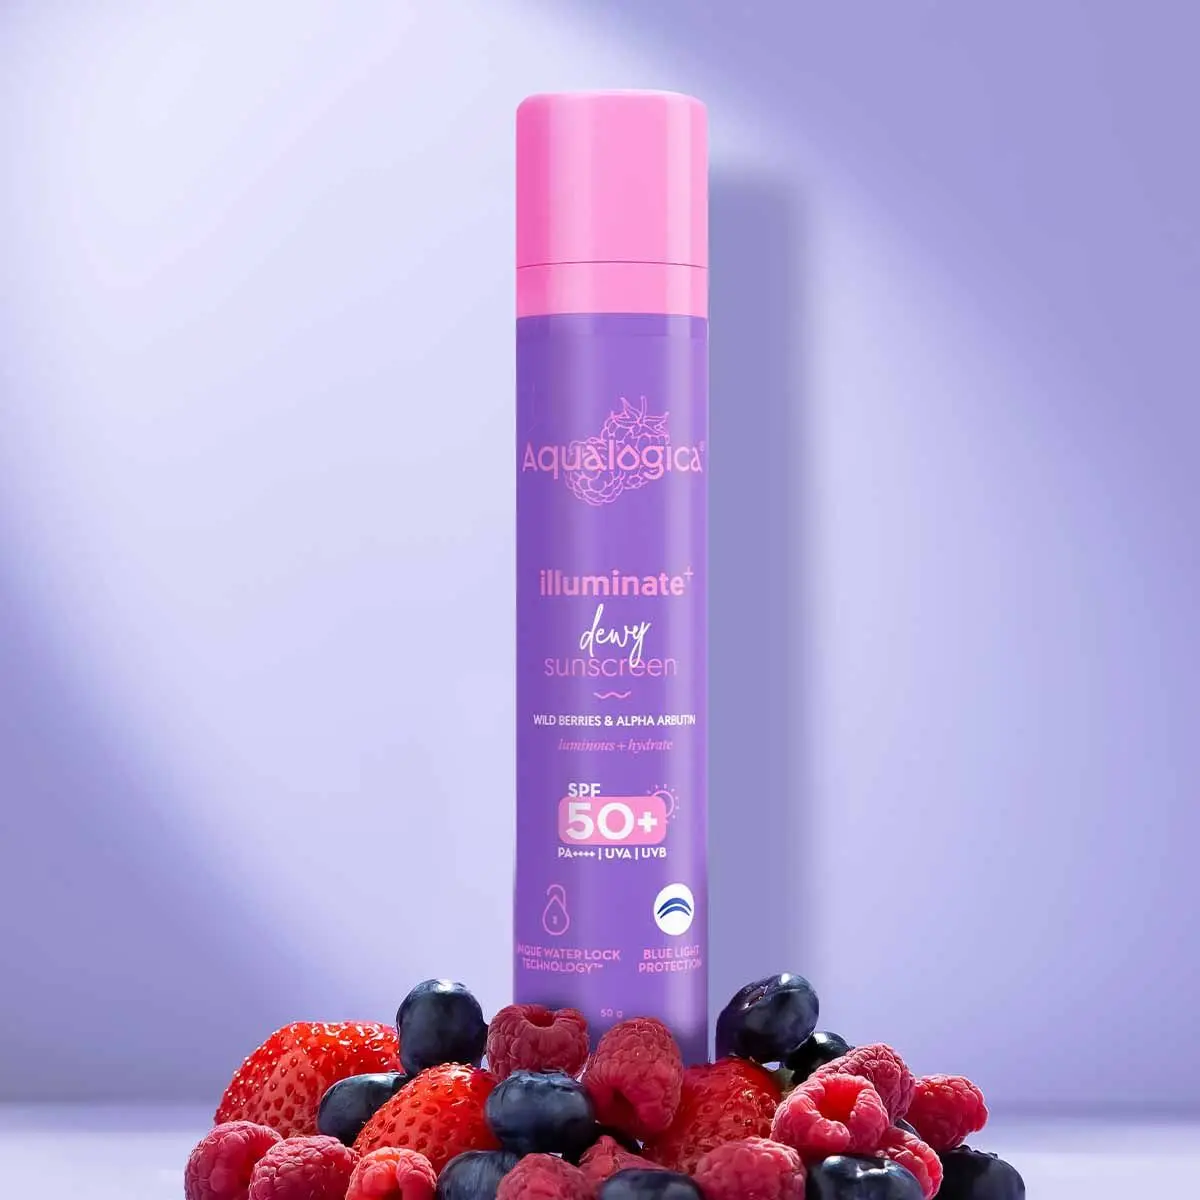 Aqualogica Illuminate+ Dewy Sunscreen SPF 50+ PA++++ with Wild Berries & Alpha Arbutin - 50 g